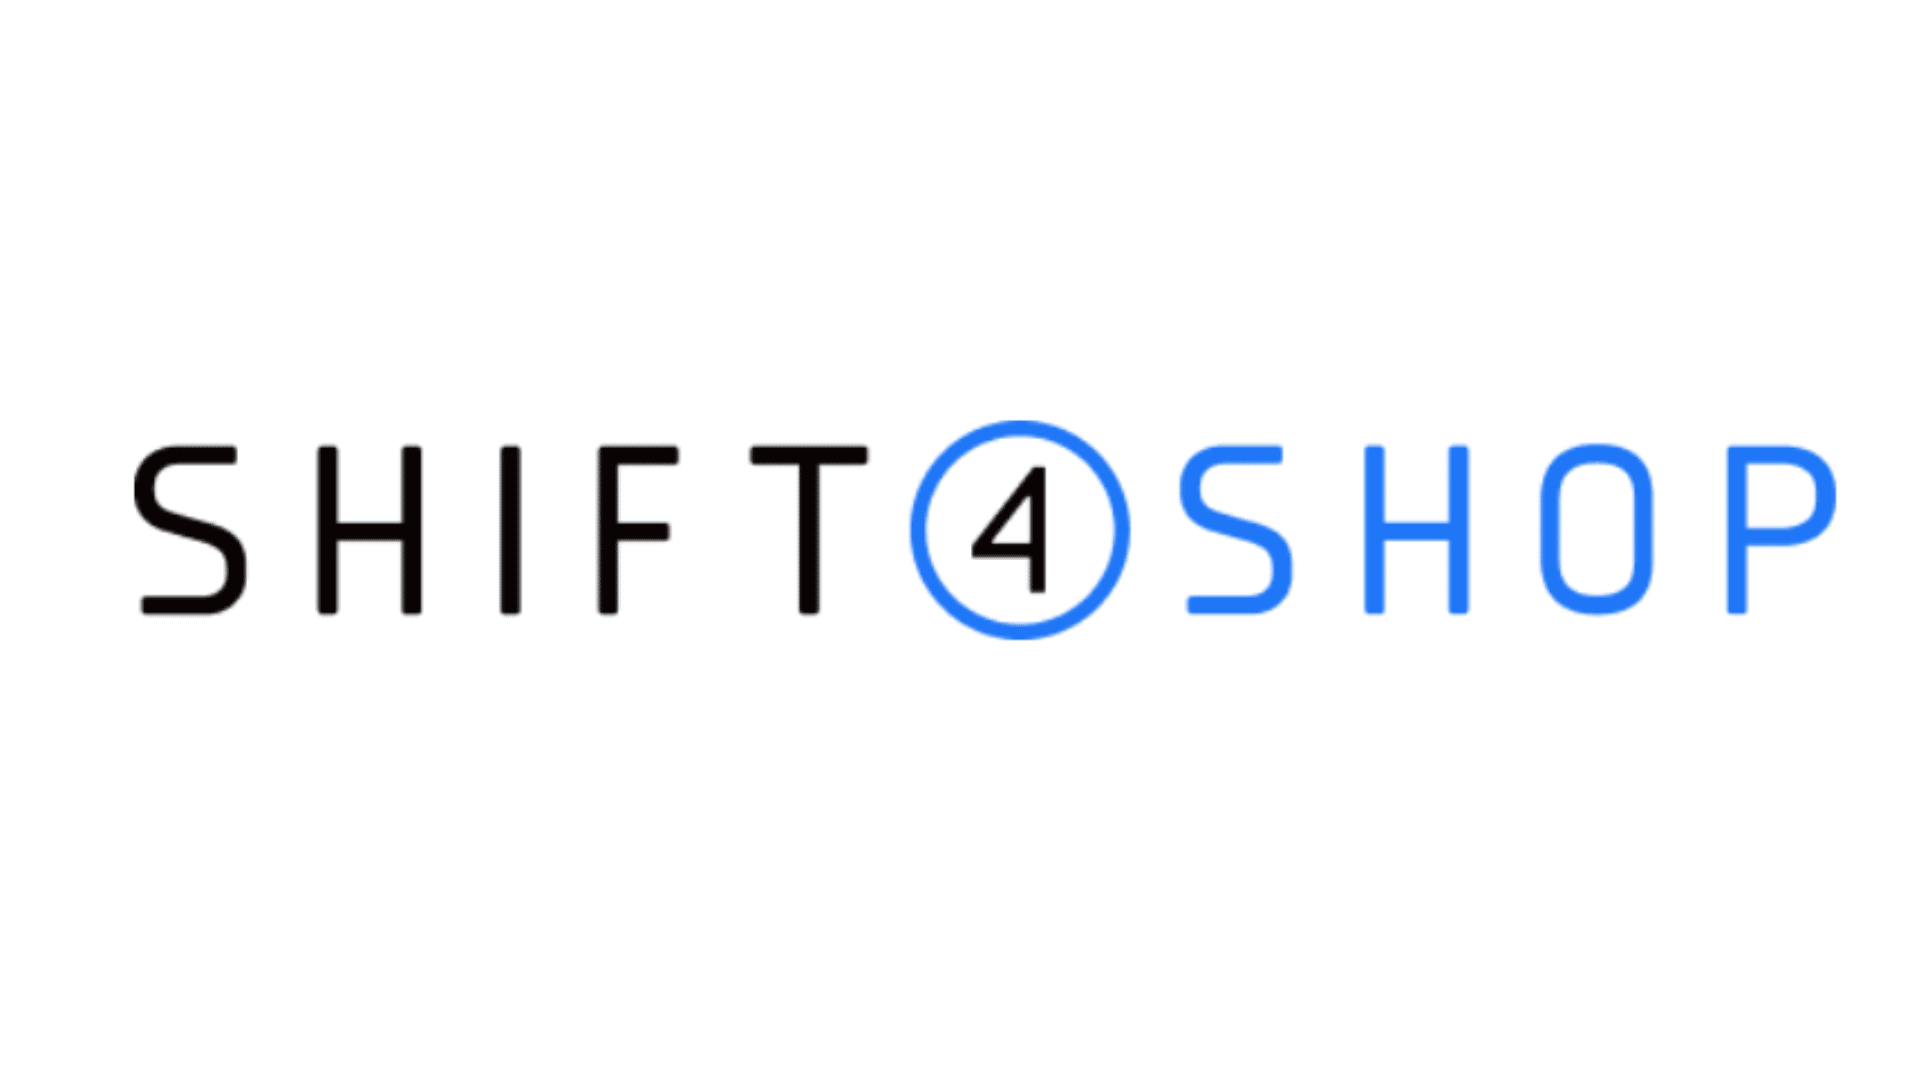 Shift4Shop